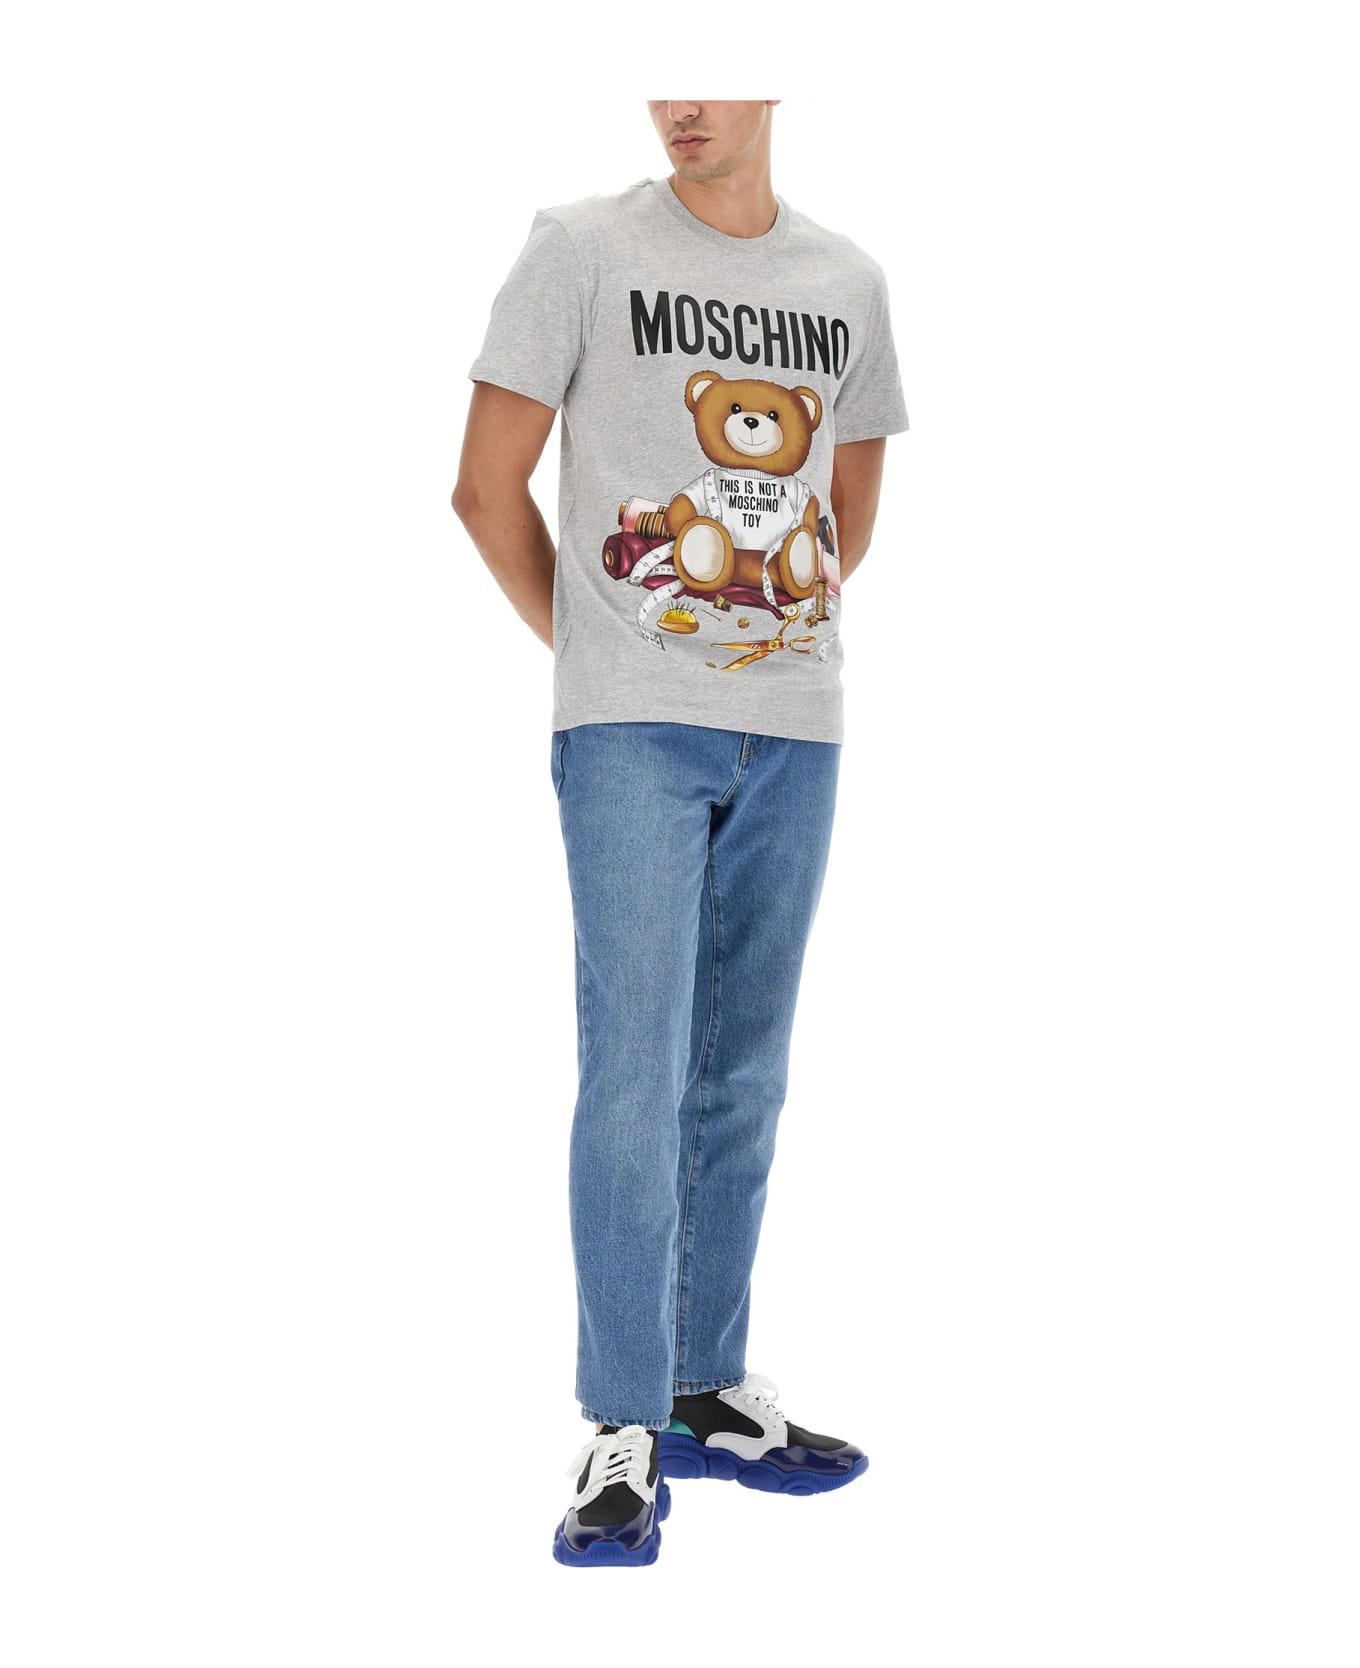 Moschino Teddy Bear T-shirt - 1485